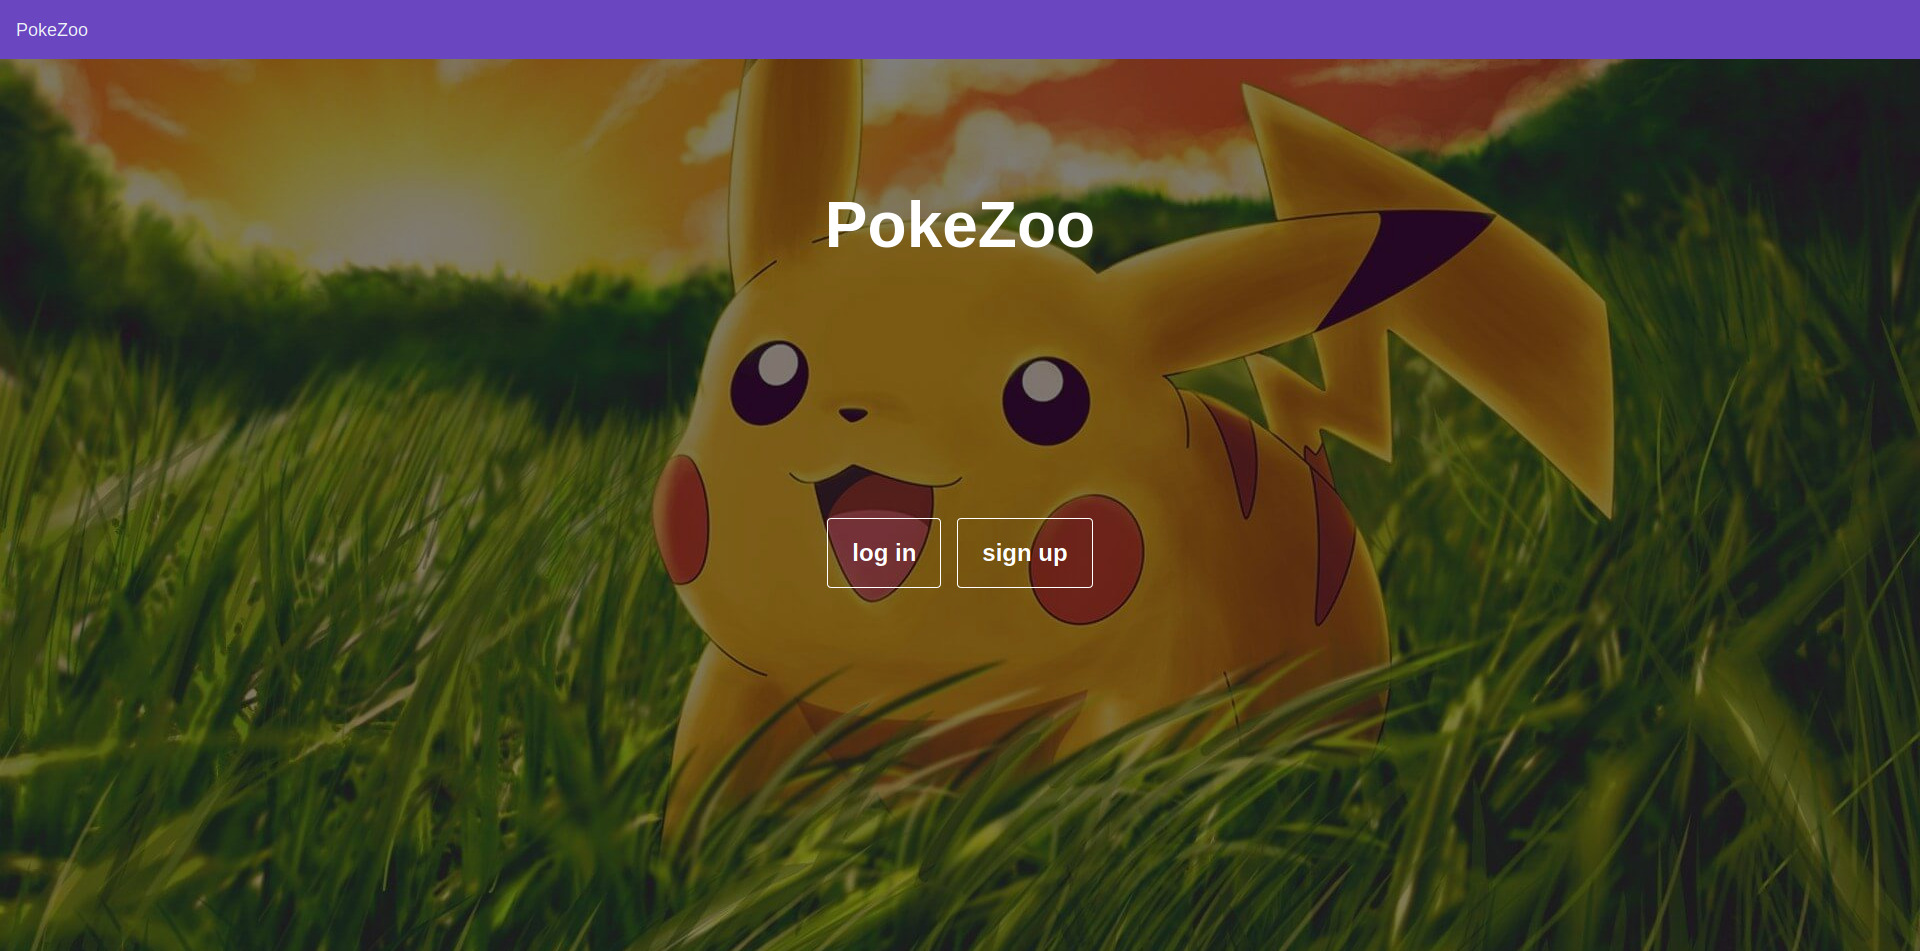 GitHub - TheRoro/PokeApp: Pokemon Search Engine ⚡🔥💧🍃